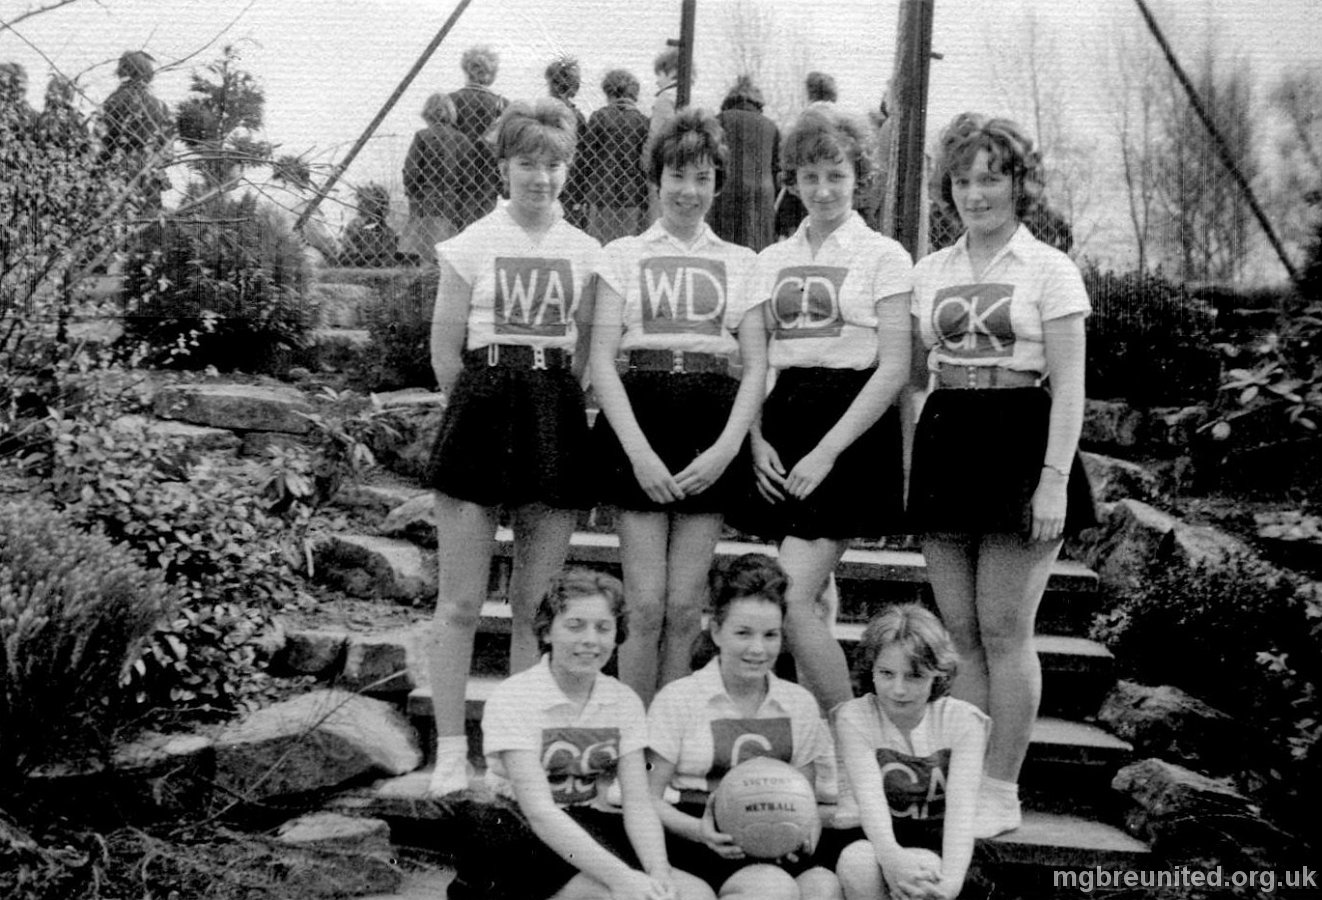 1962 04 Netball Team TOP ROW: Susan De-Barr, Hilary Hulme, Norma Drew, Carole Eggleton. FRONT ROW: Carole Smith, Anita Hopewell, Judith Taylor. Location: Netball courts MGB. April 1962.